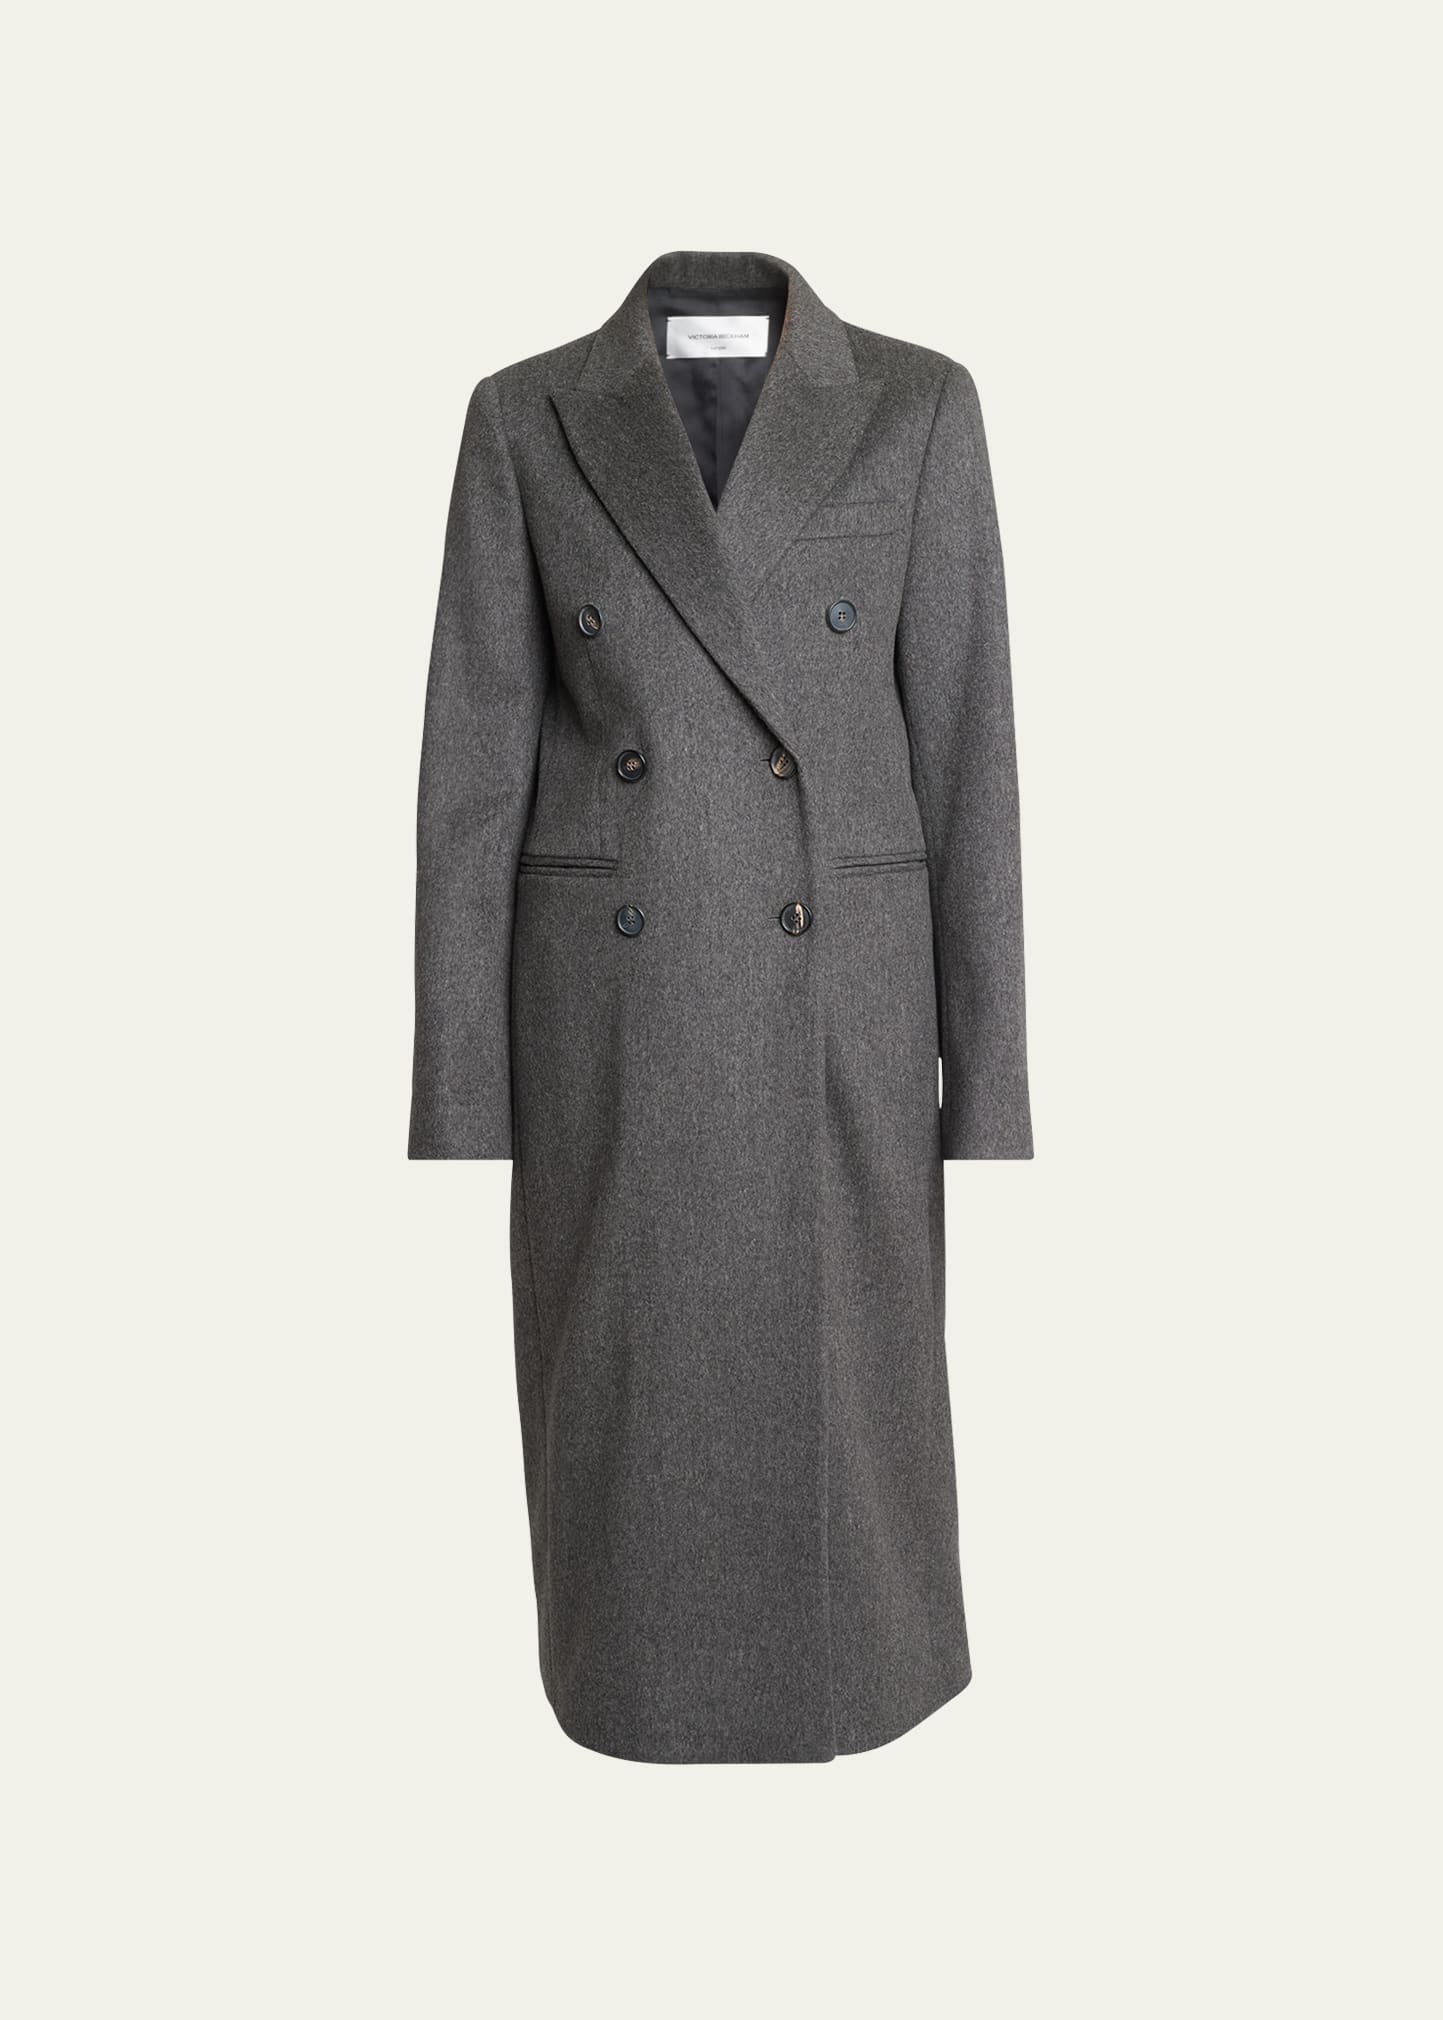 Victoria Beckham Double-breast Tailored Slim Wool Coat In Grey Melange